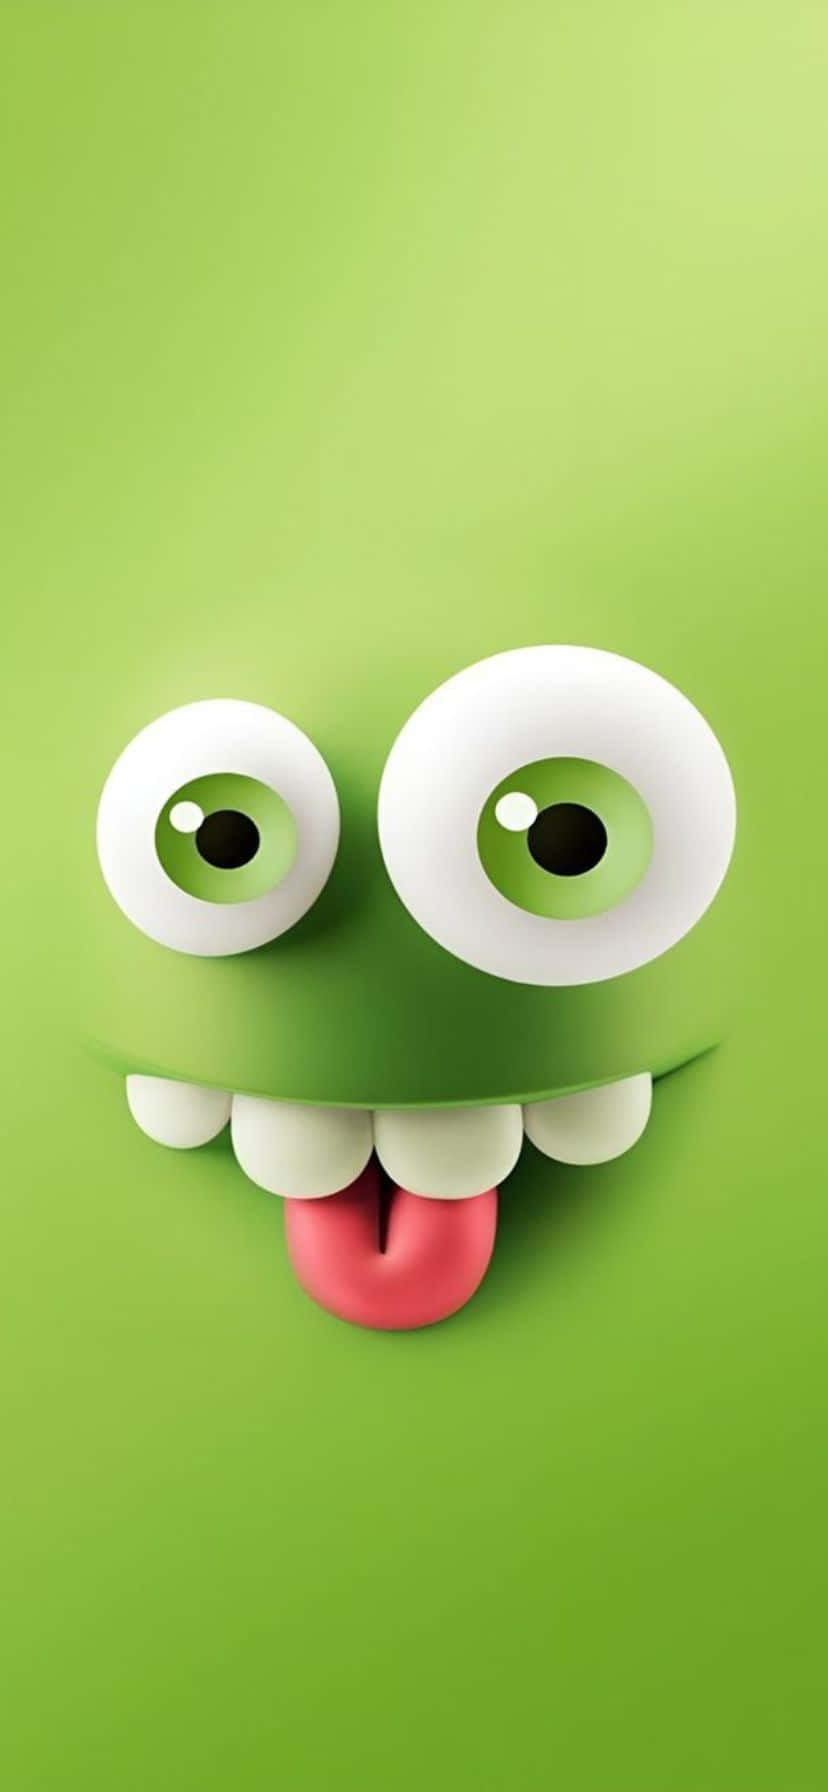 Goofy Face Emoji Green Background Wallpaper